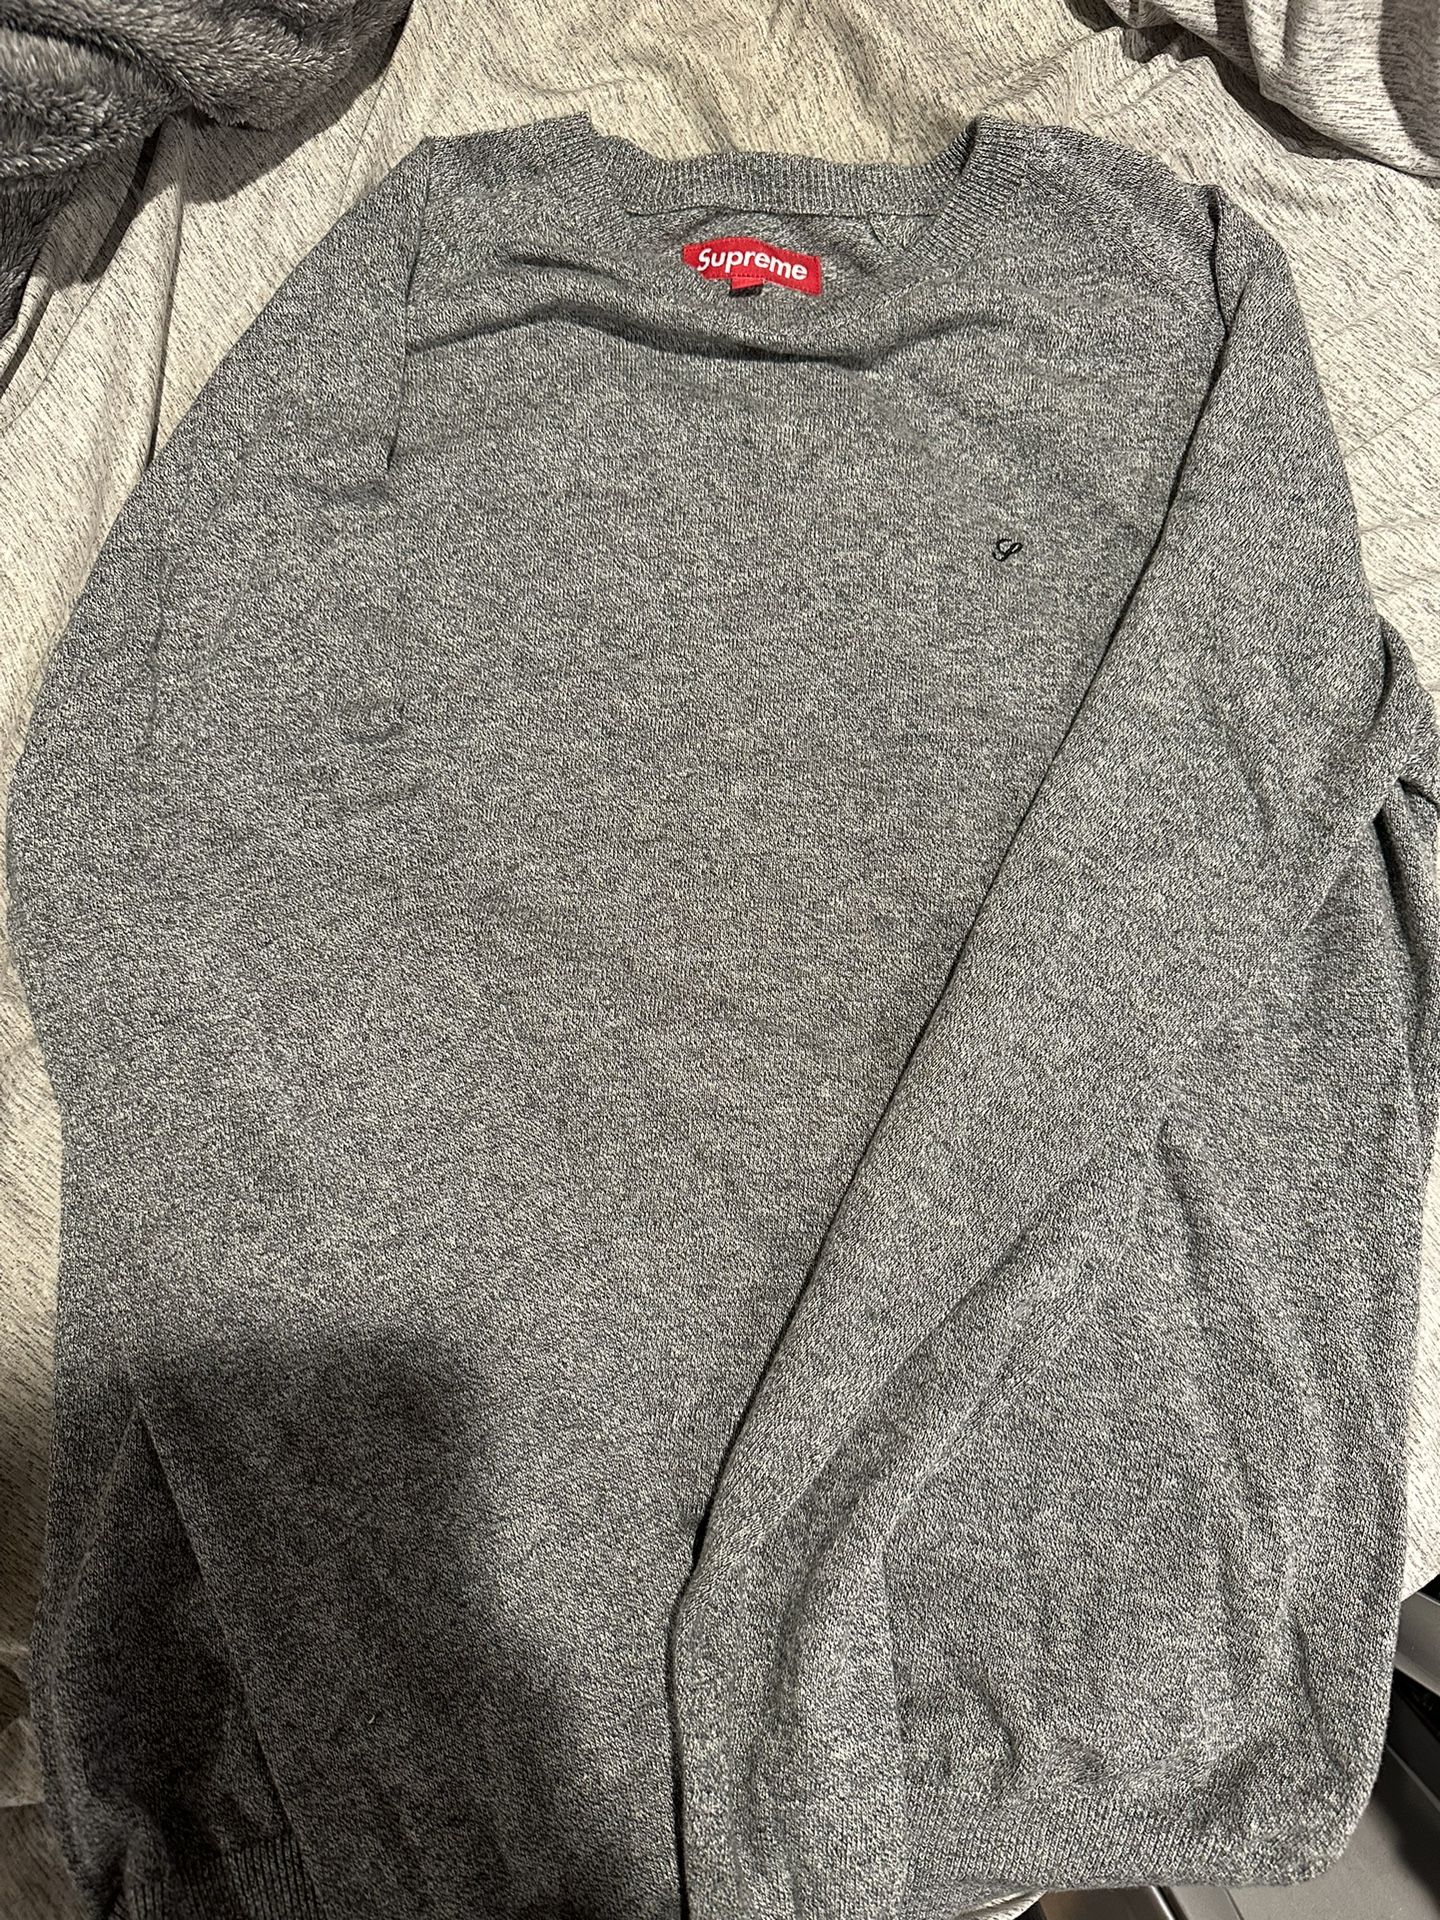 Supreme Small S Grey Crewneck Sweater- Size M